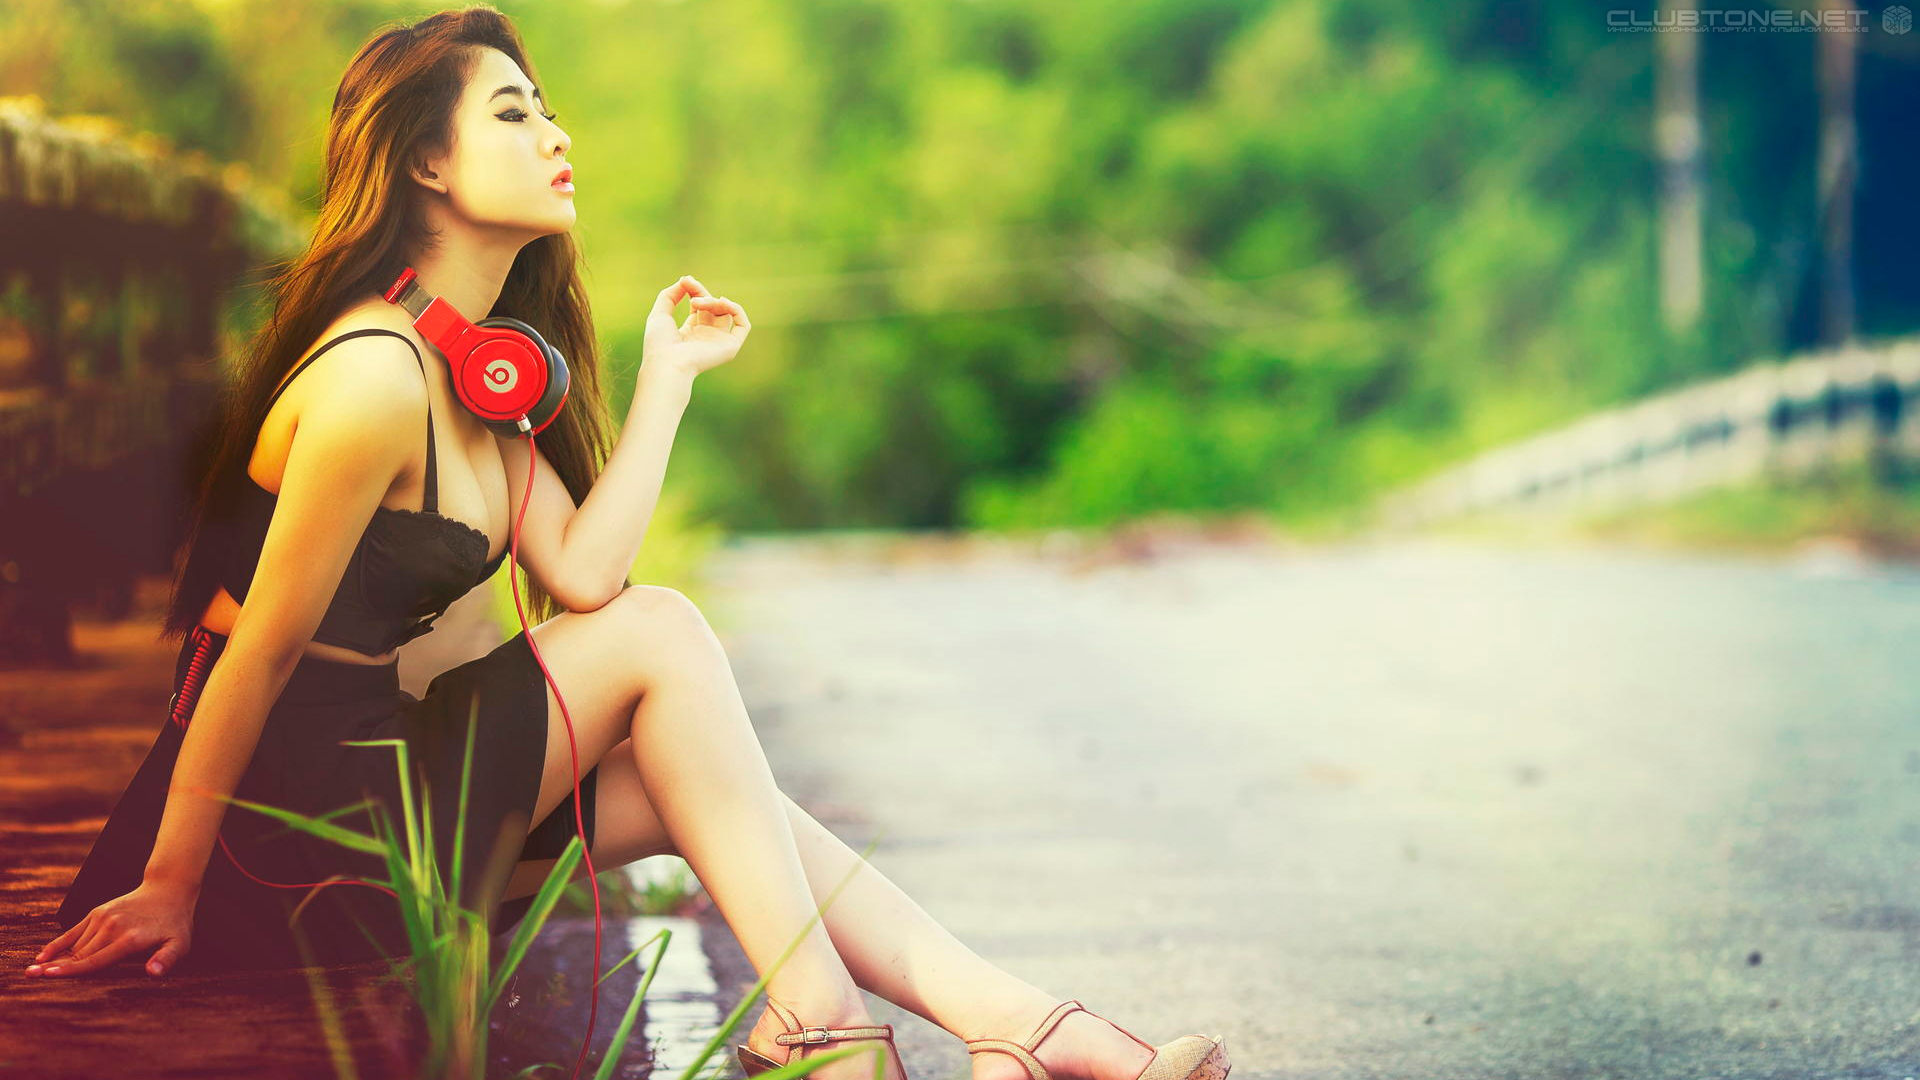 thai girl with headphones 2  